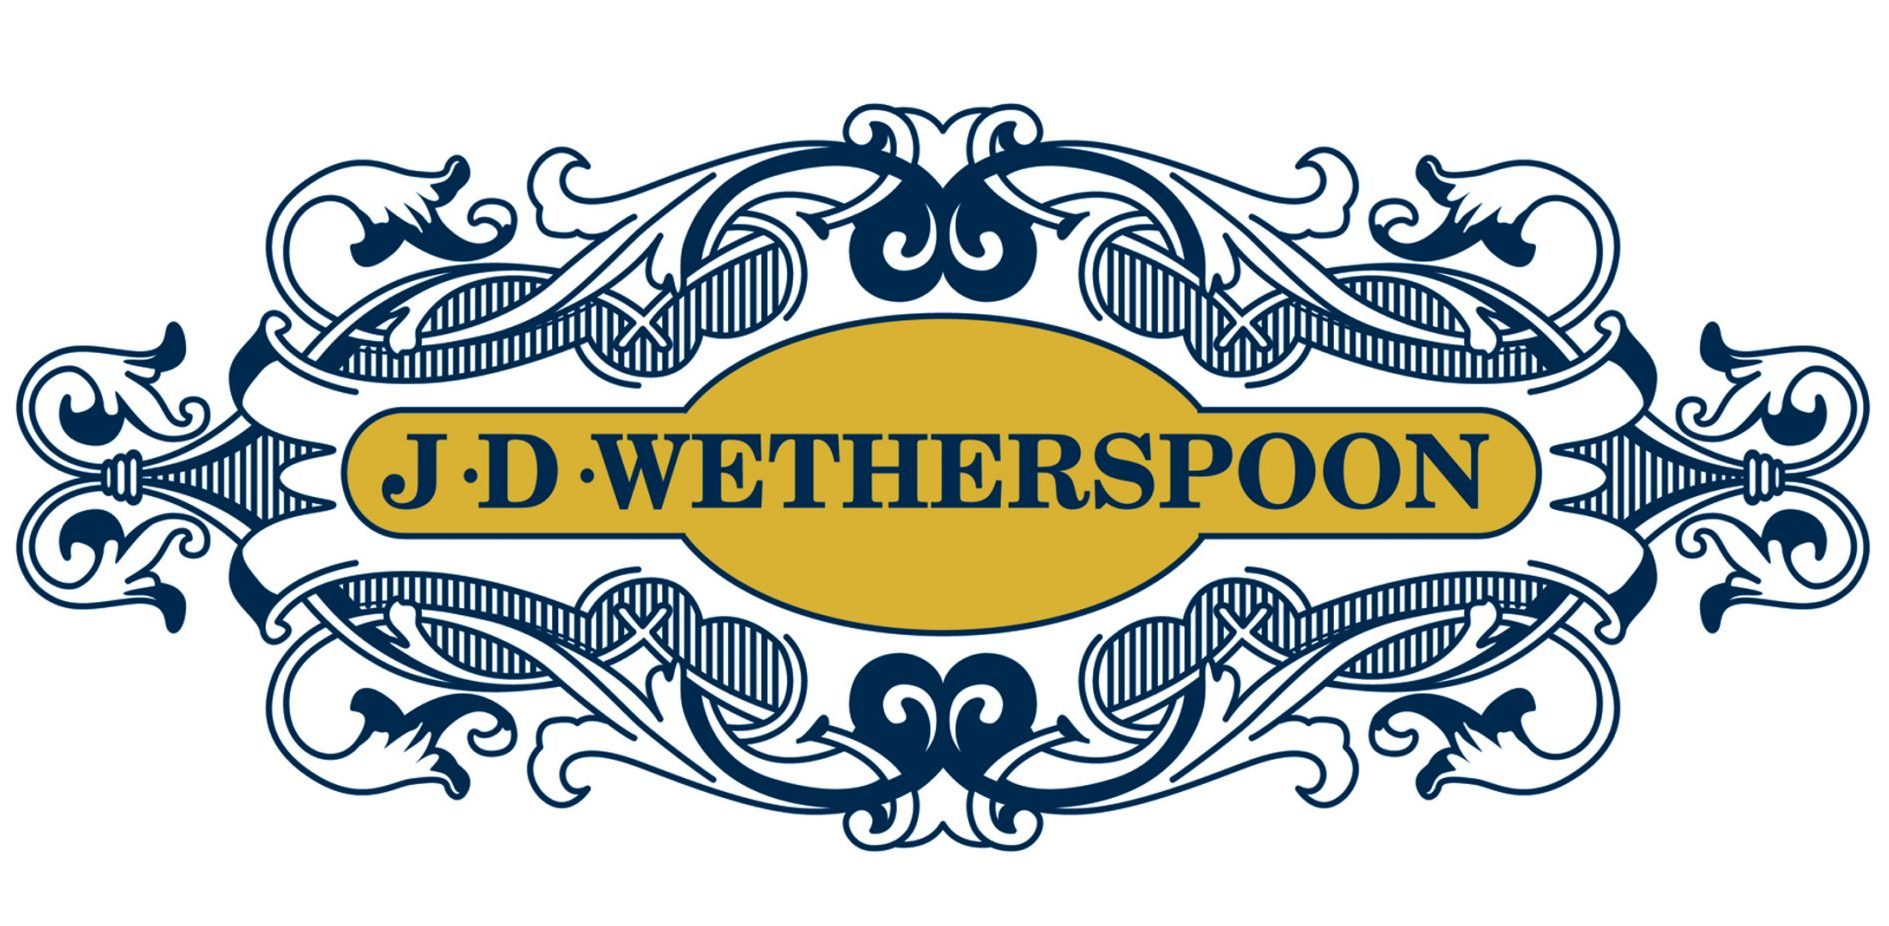 J D Wetherspoon company logo